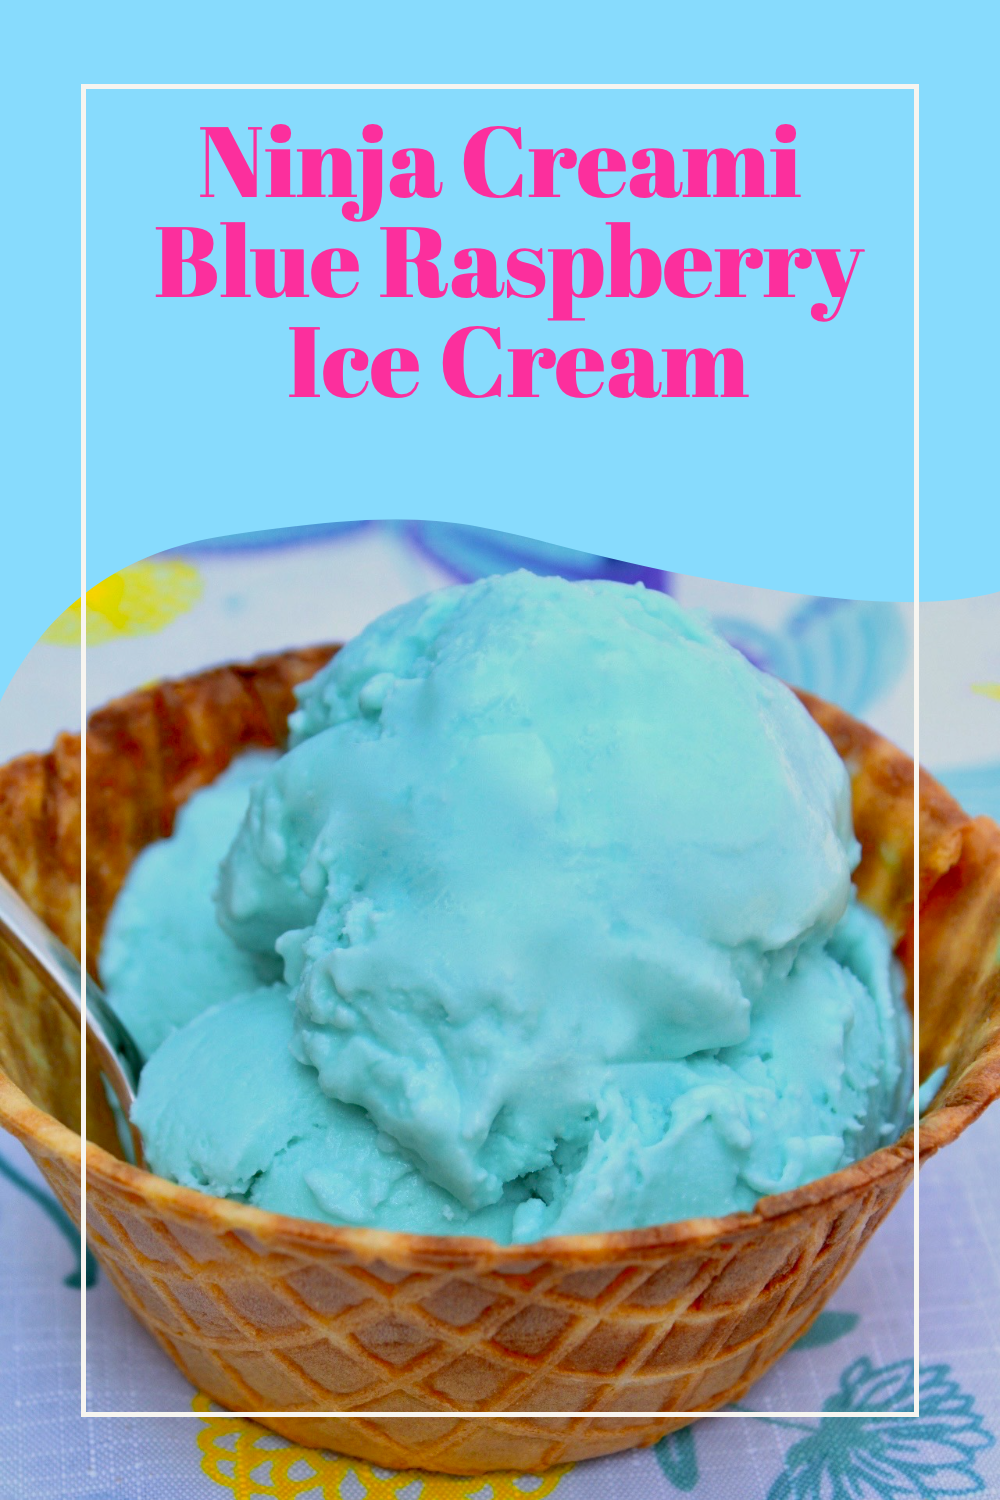 Blue Moon Ice Cream Recipe